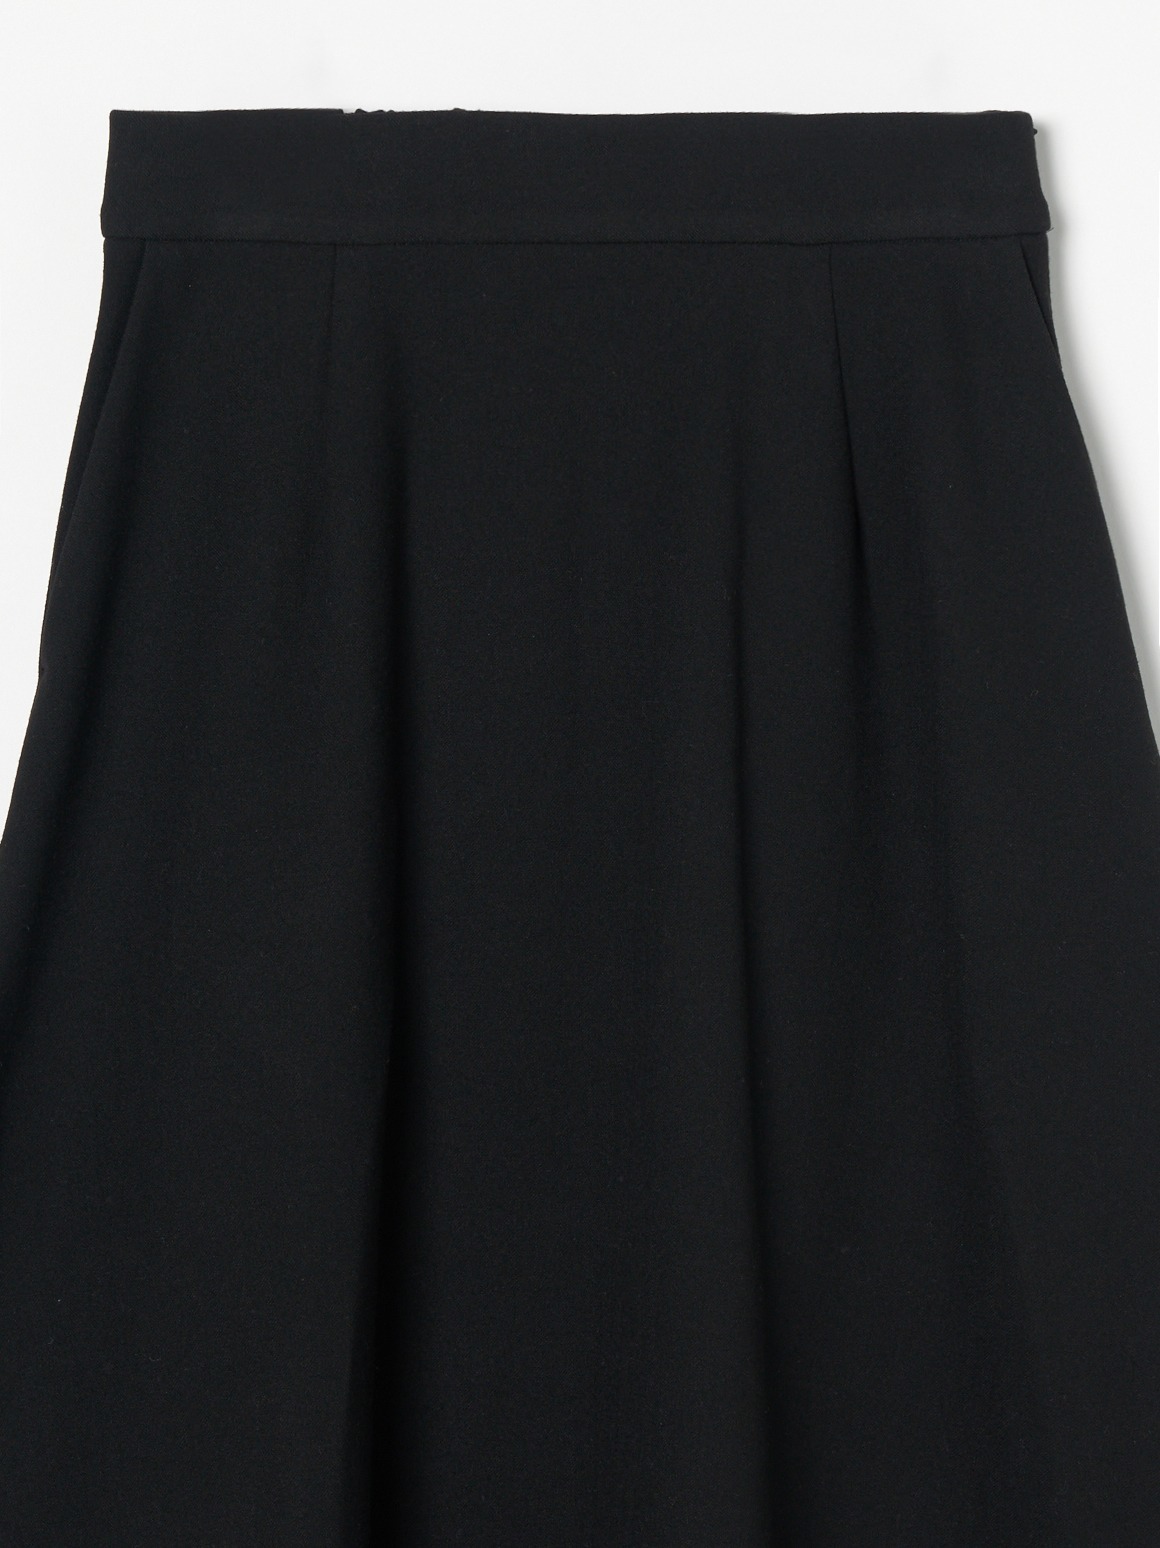 Stretch tweed skirt 詳細画像 black 2